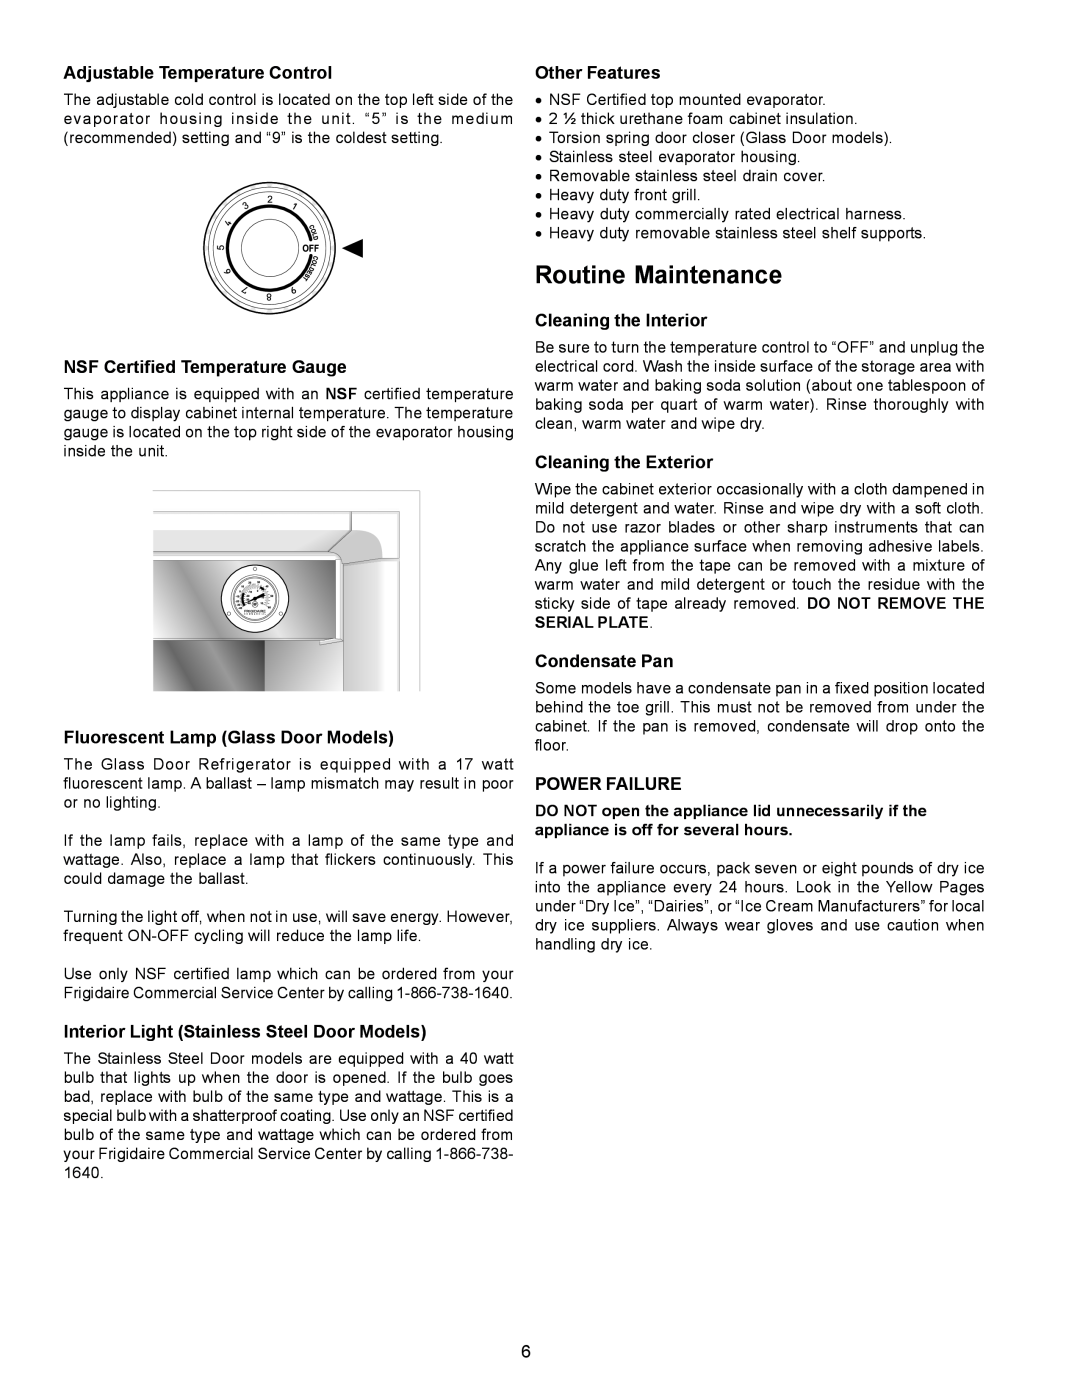 Frigidaire FREEZER/REFRIGERATOR GLASS DOOR REFRIGERATOR Routine Maintenance, Adjustable Temperature Control, Power Failure 